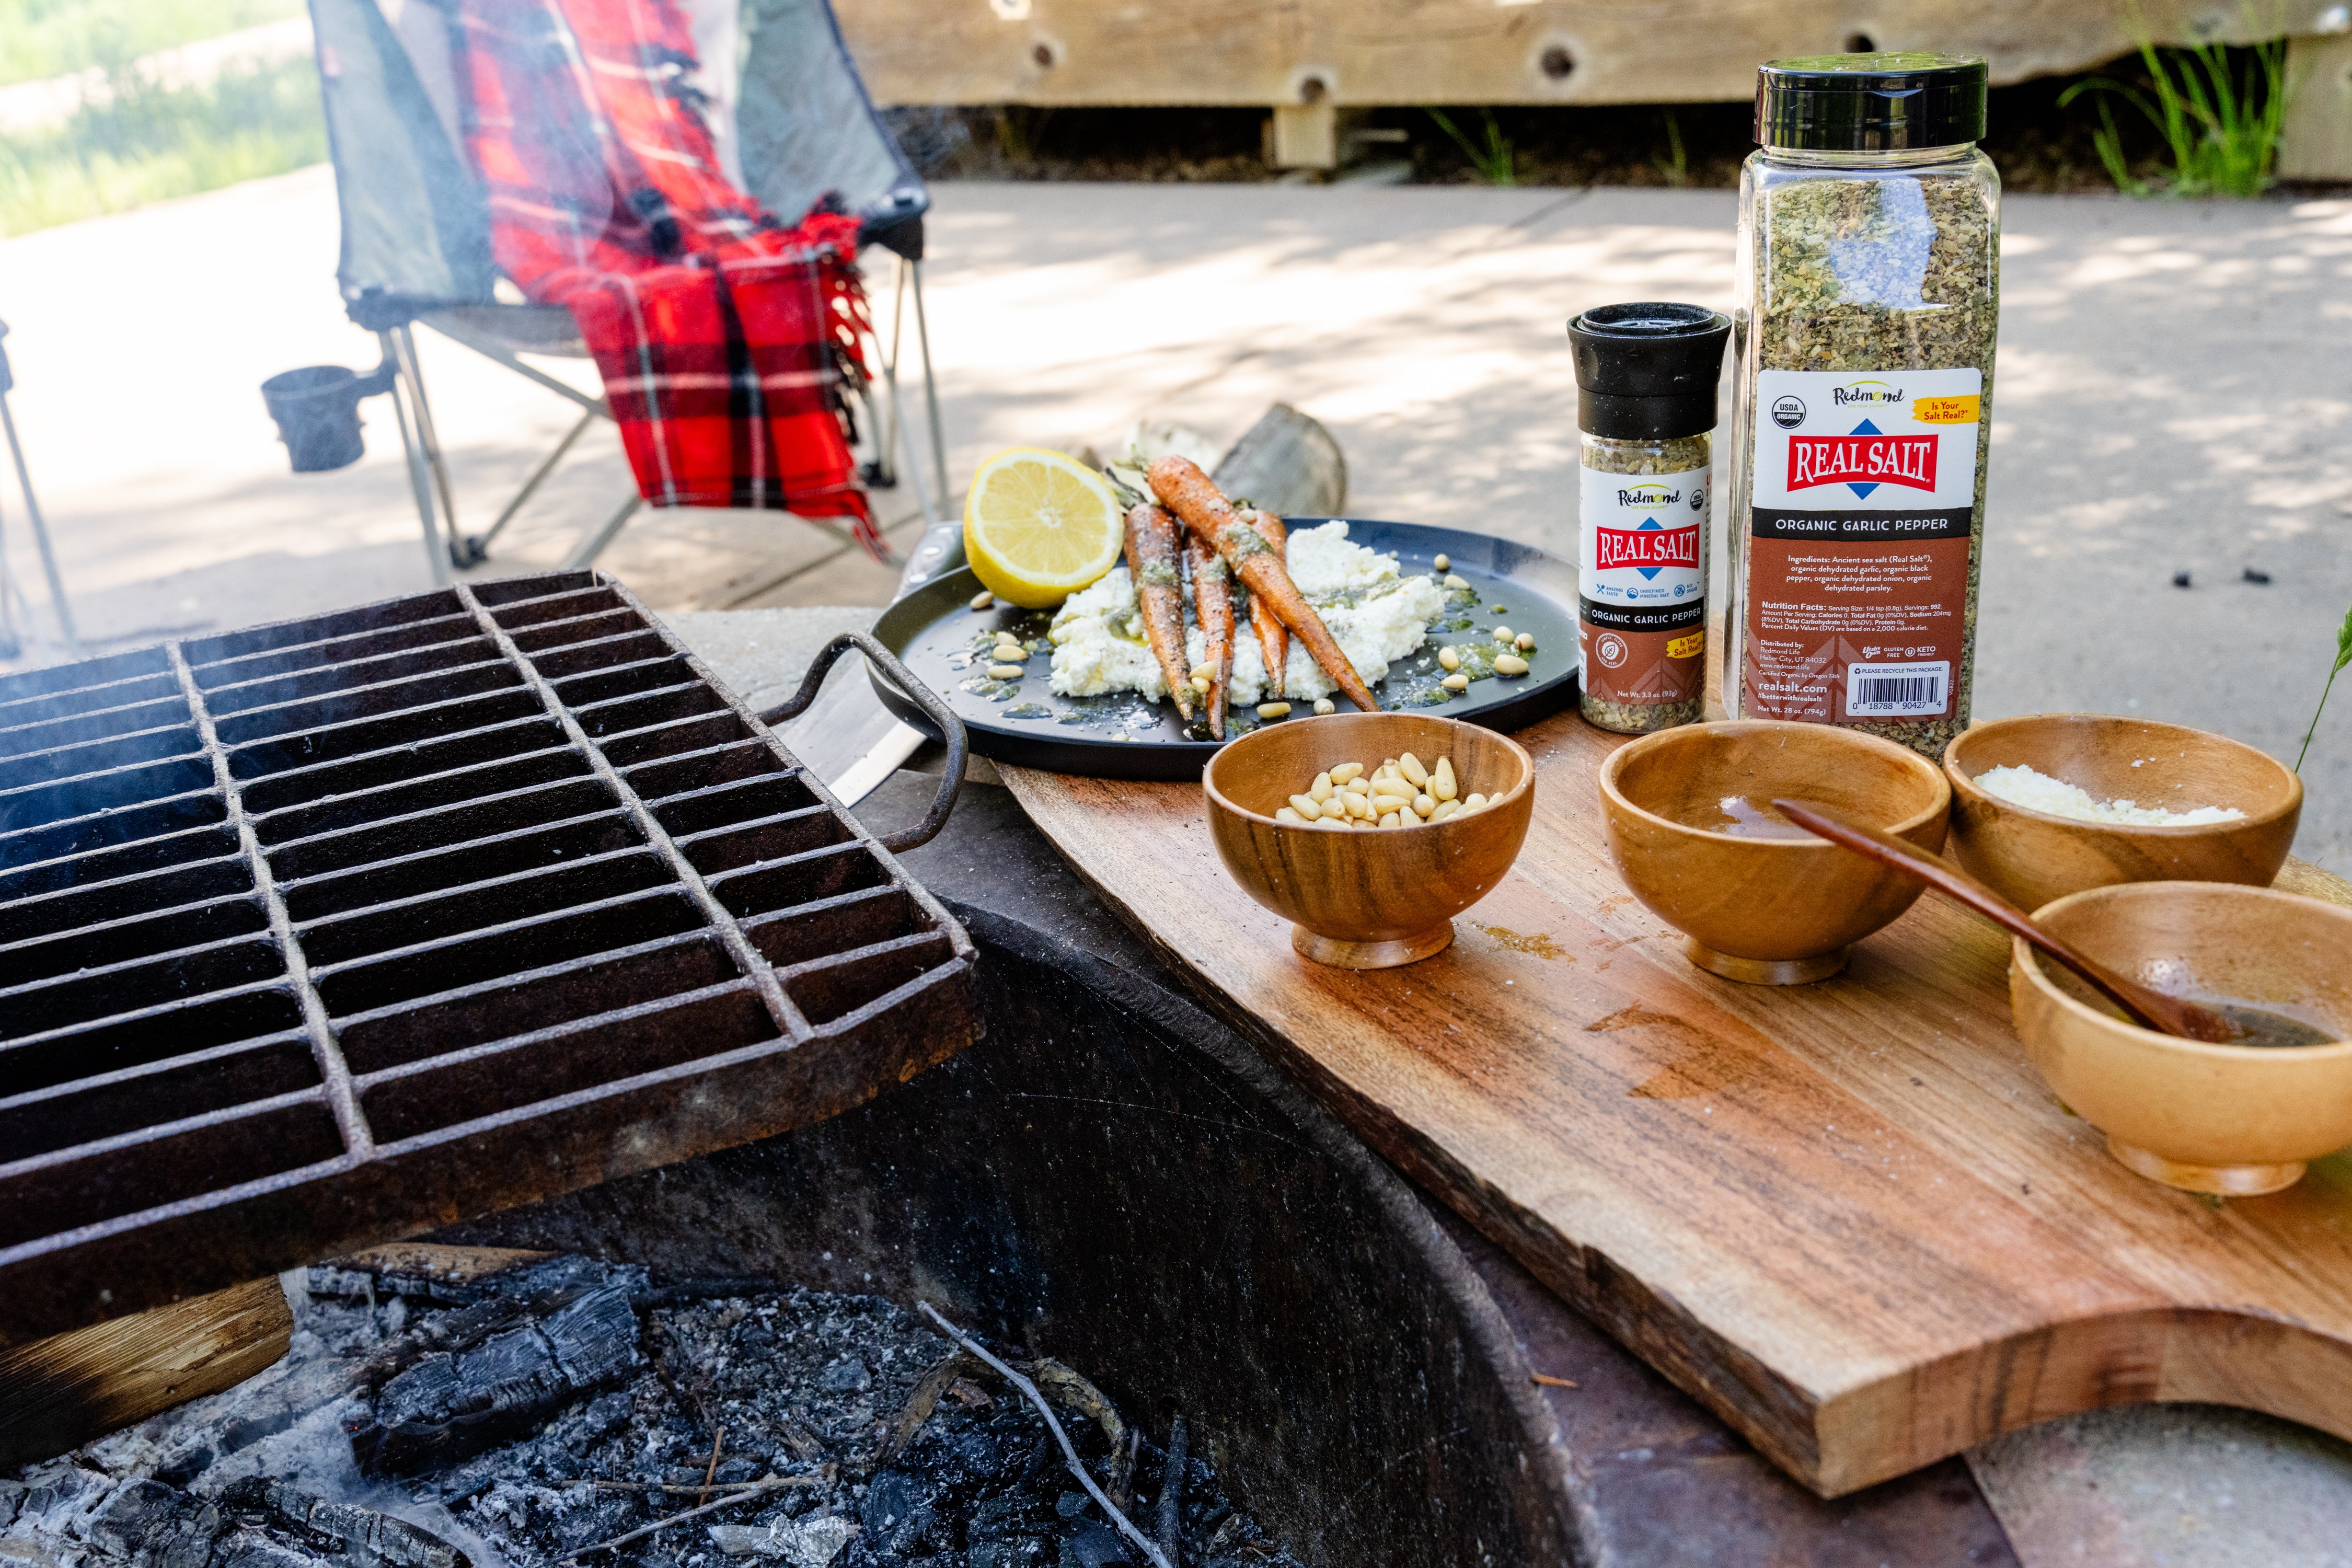 Real Salt organic garlic pepper on summer camping food.